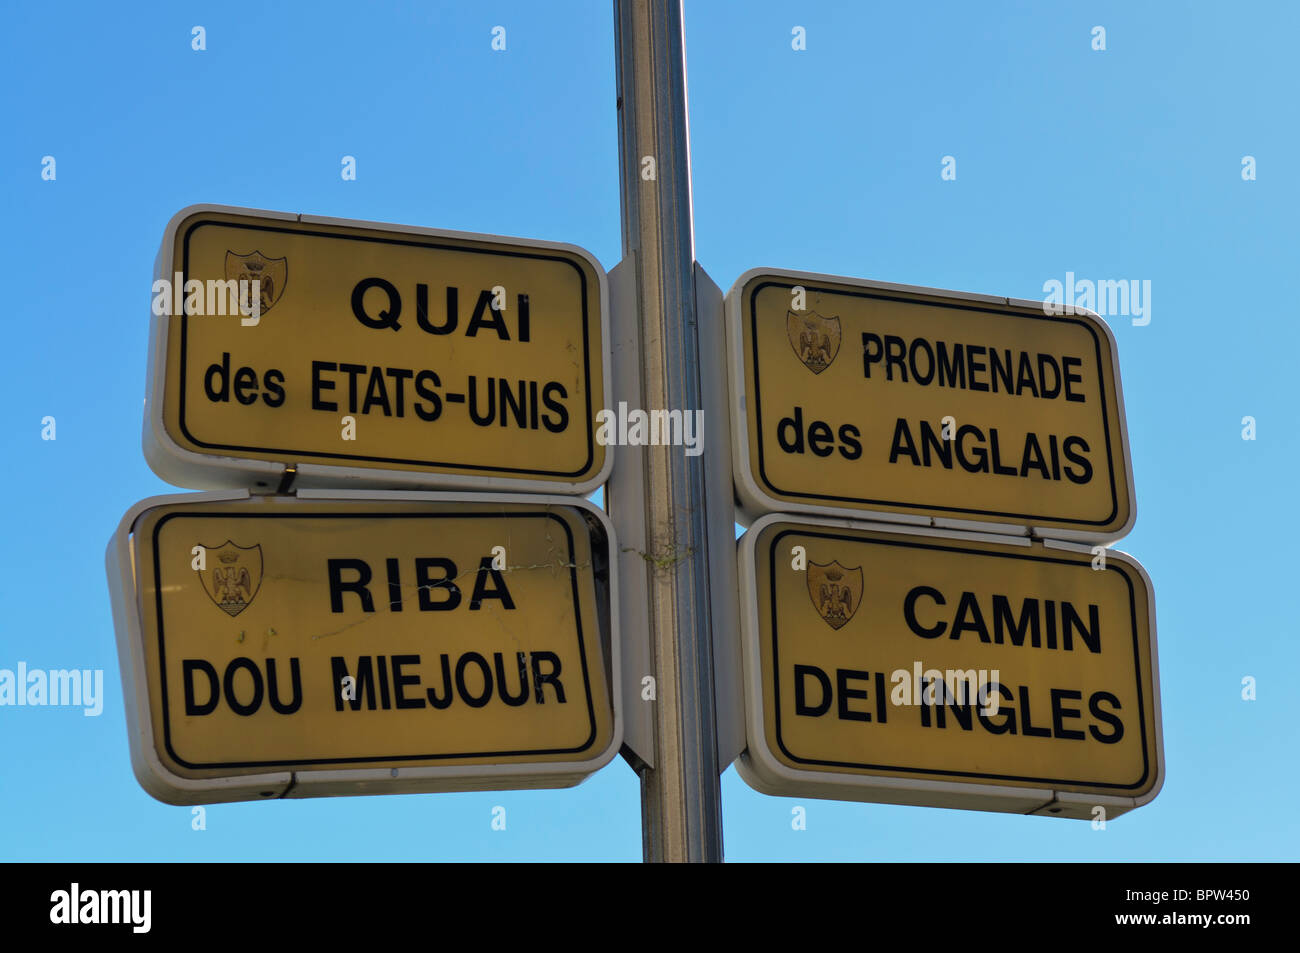 Street signs in Nice - Quai des Etats-Unis, Promenade des Anglais, Riba Dou Miejour, Camin Dei Ingles Stock Photo